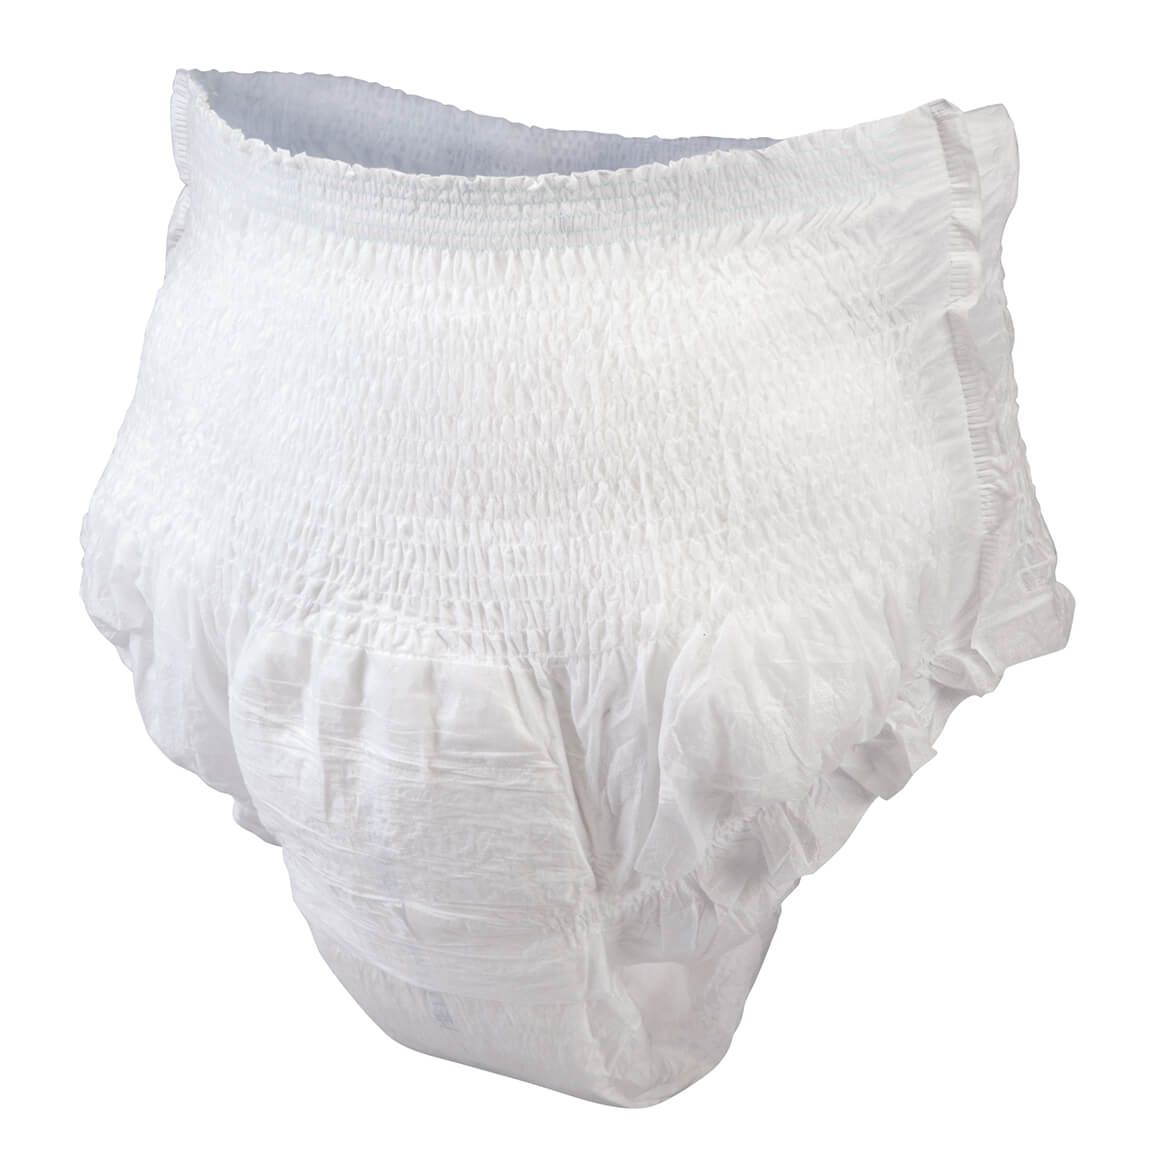 Unisex Protective Underwear, Package + '-' + 347594